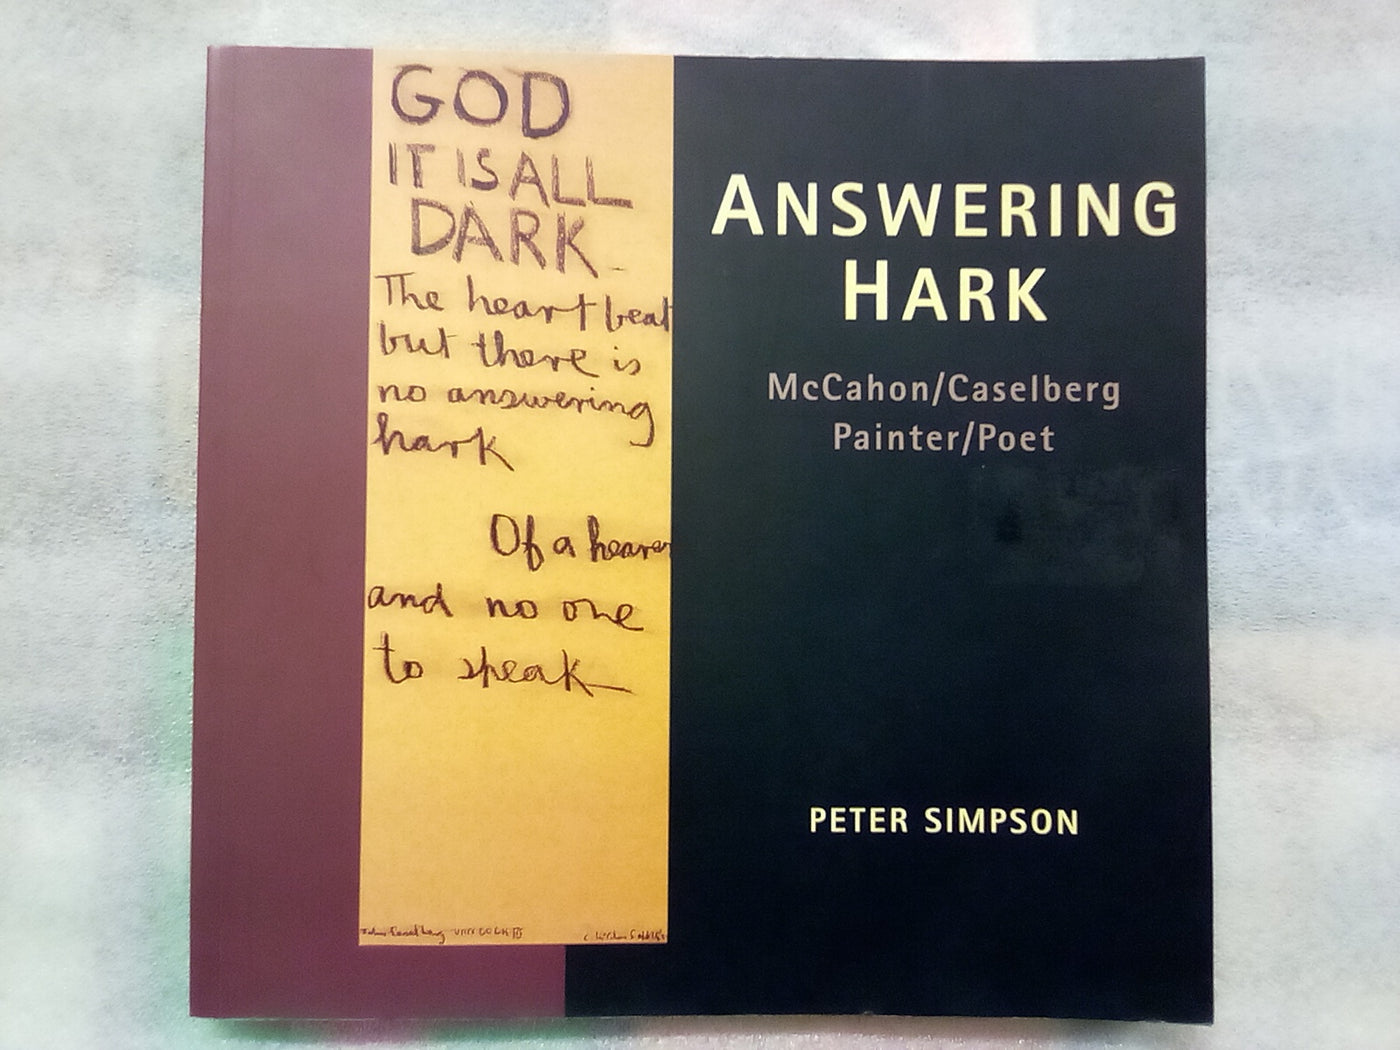 Answering Hark - McCahon/Caselberg Painter/Poet